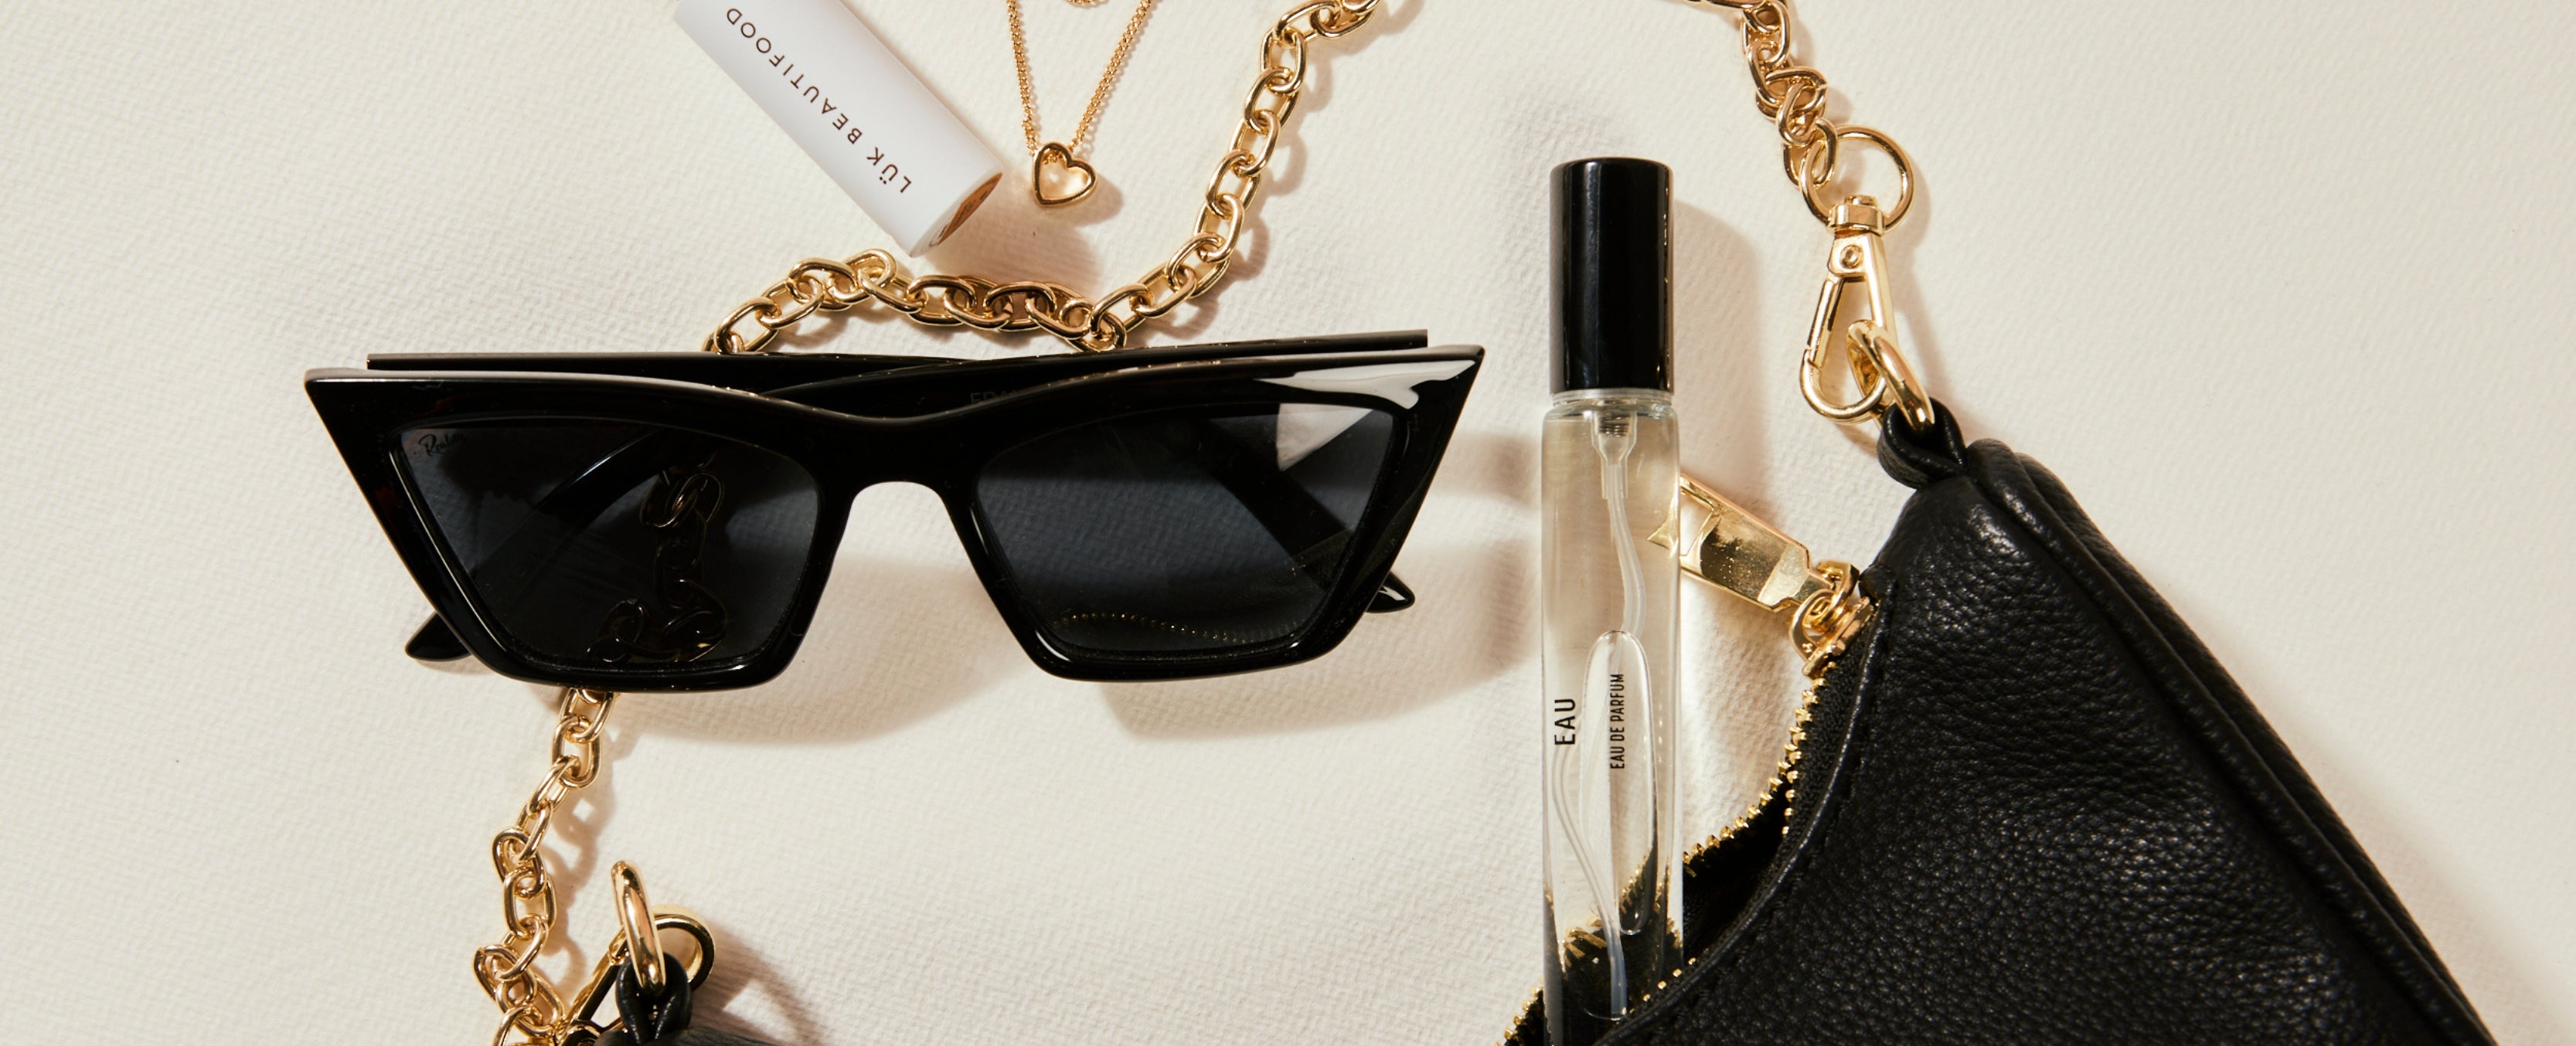 Image of sunglasses and bag